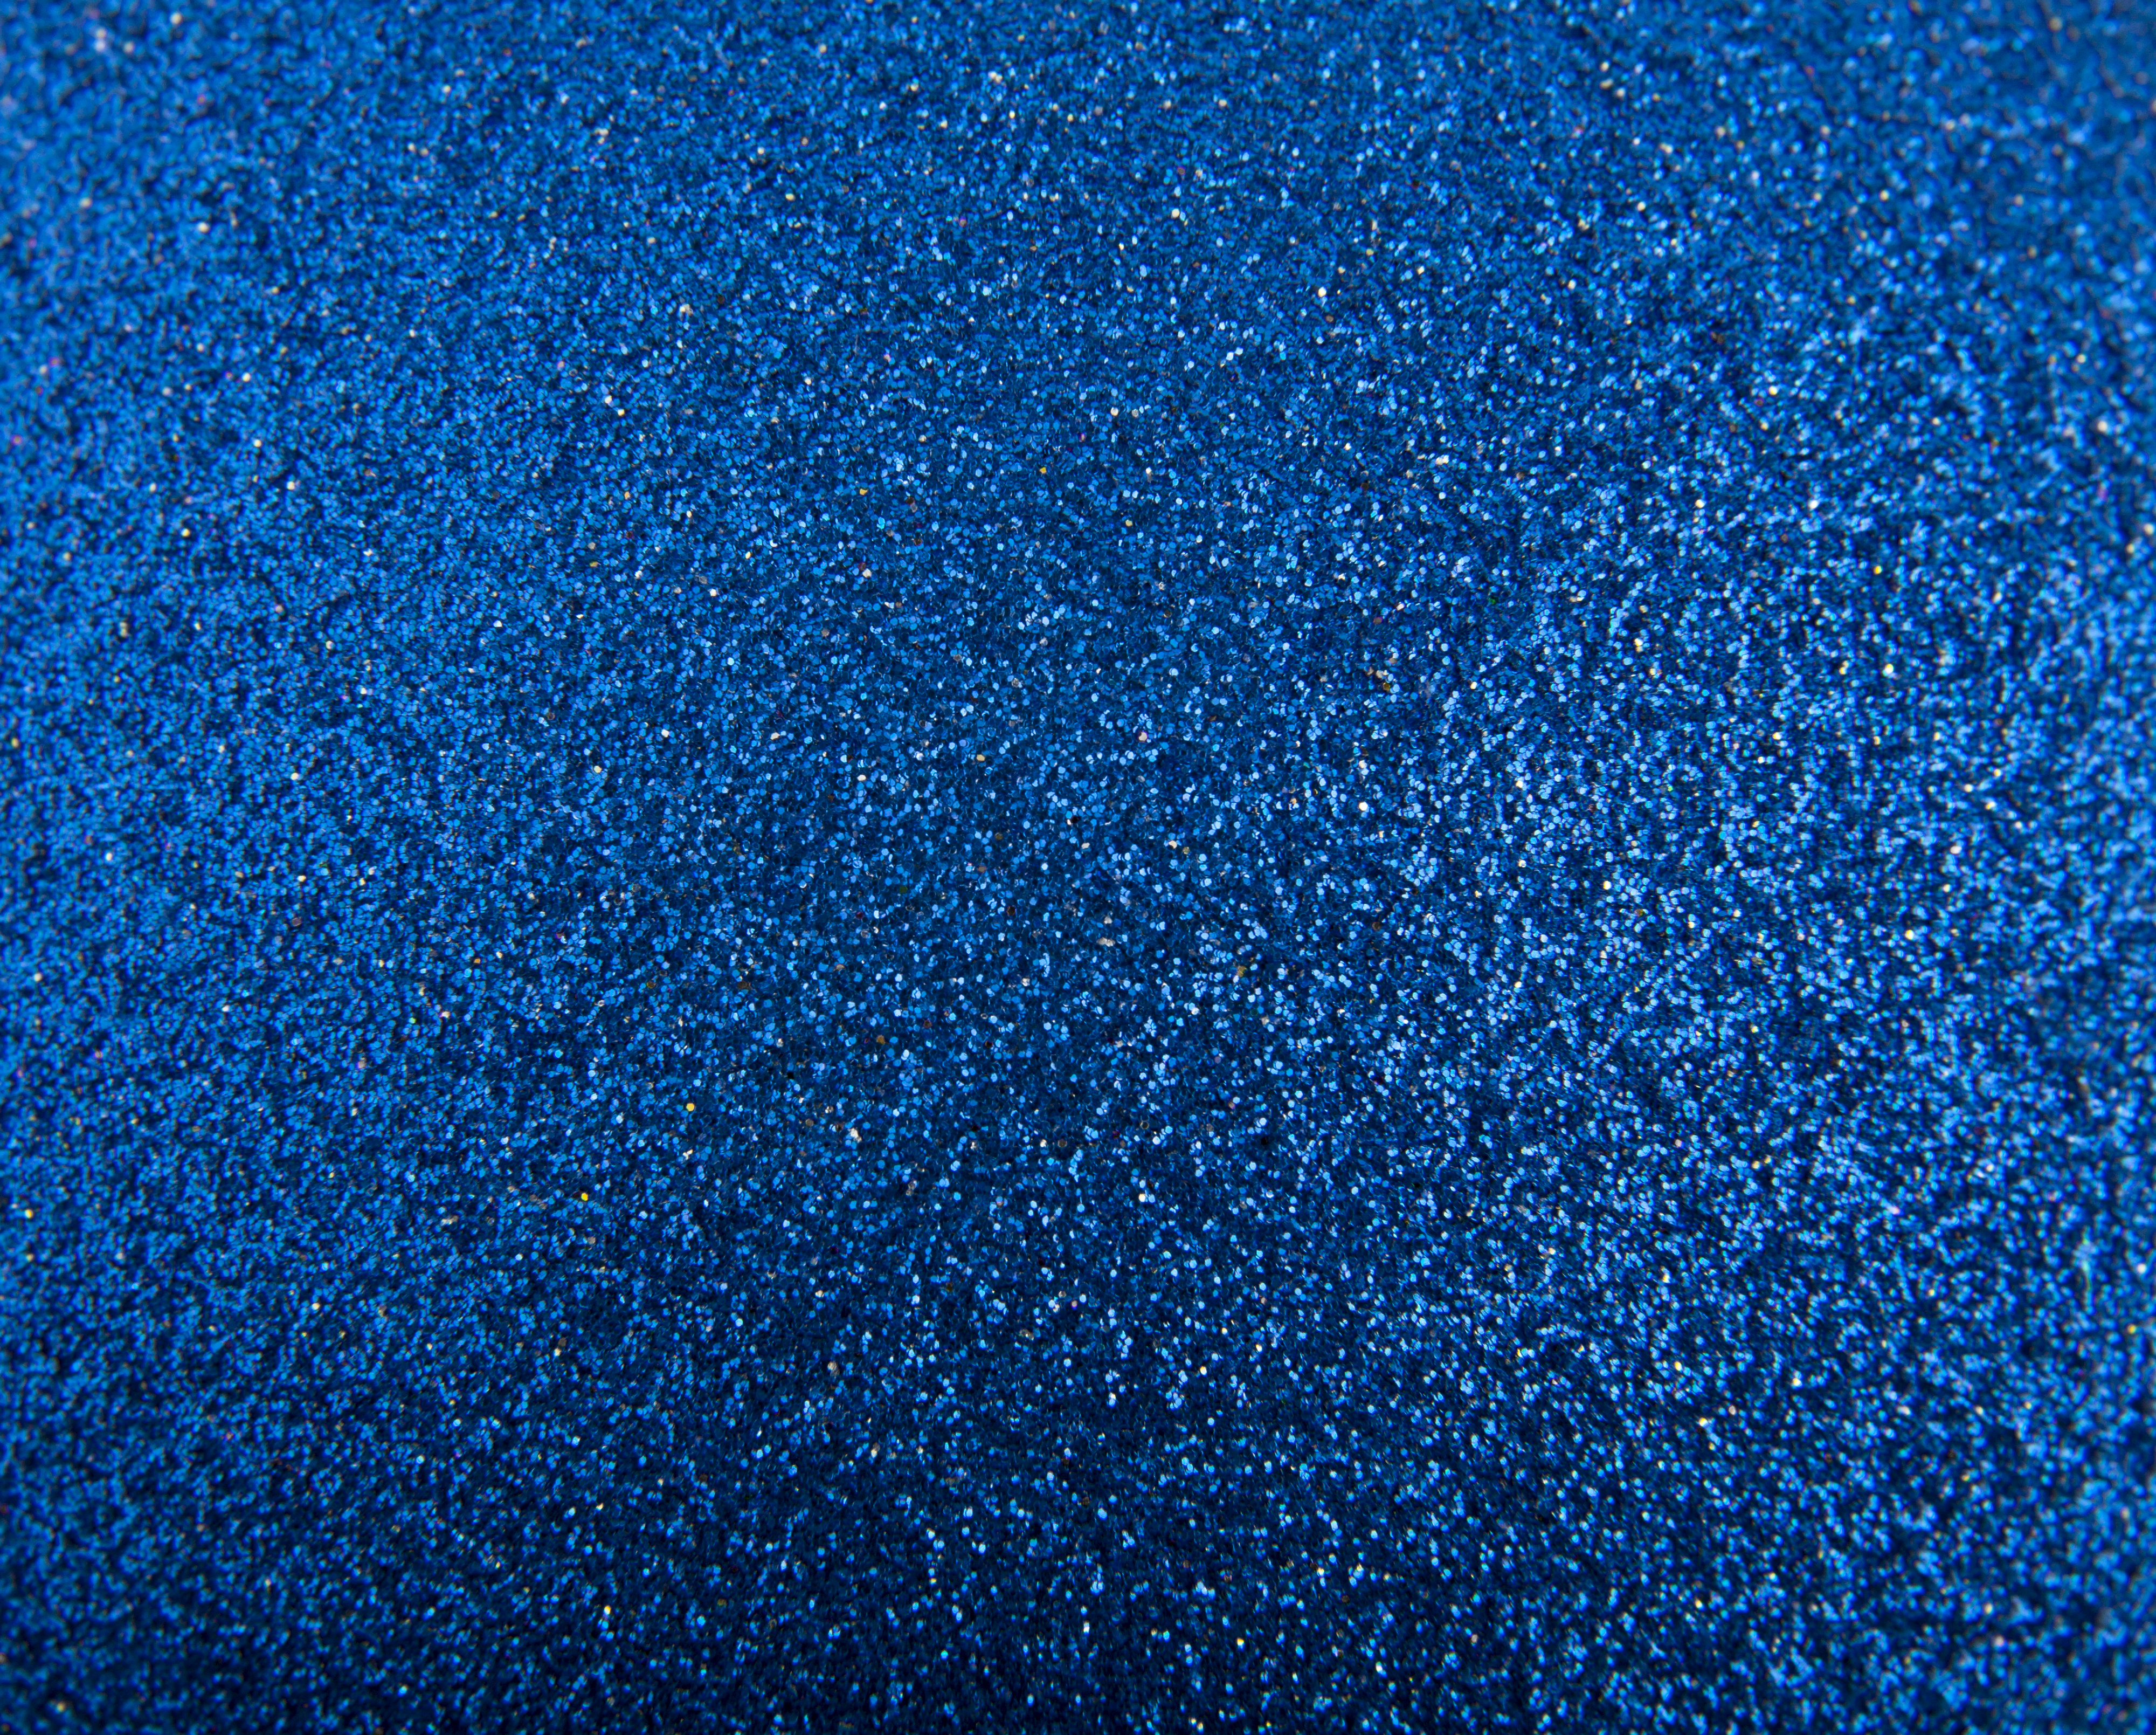 blue glitter backgrounds